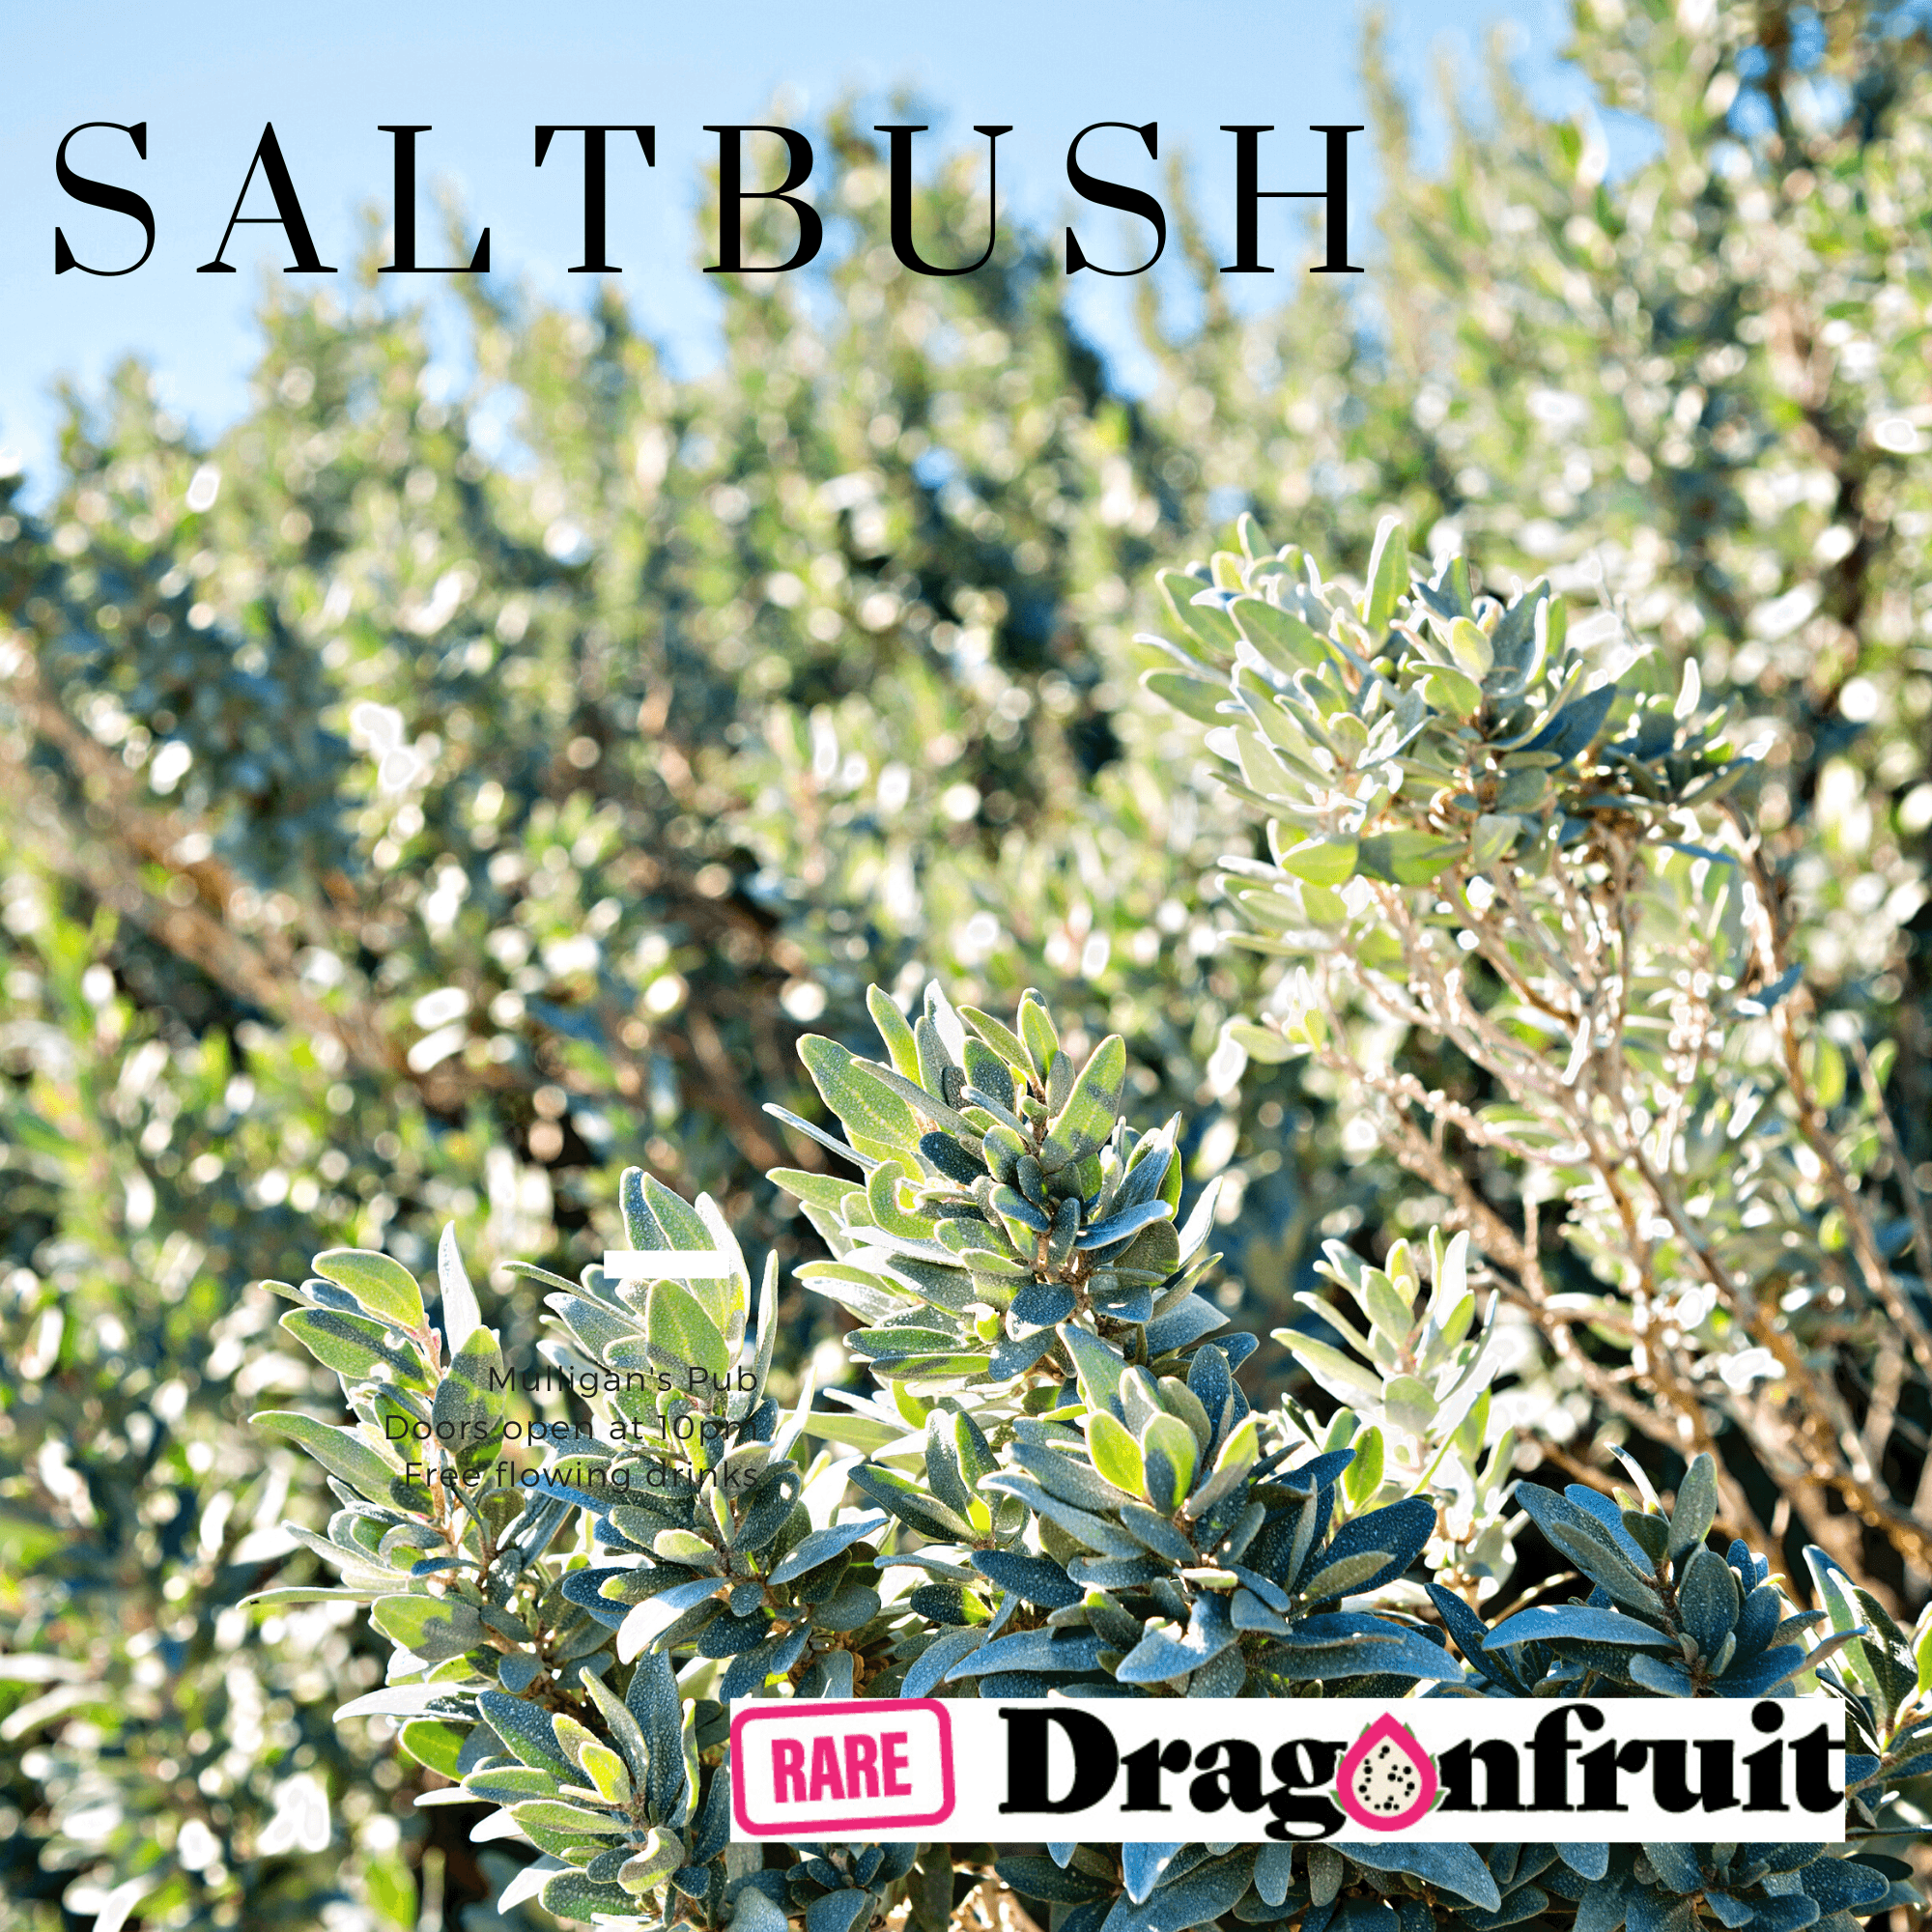 Salt Bush - Bush tucker plant - Rare Dragon Fruit